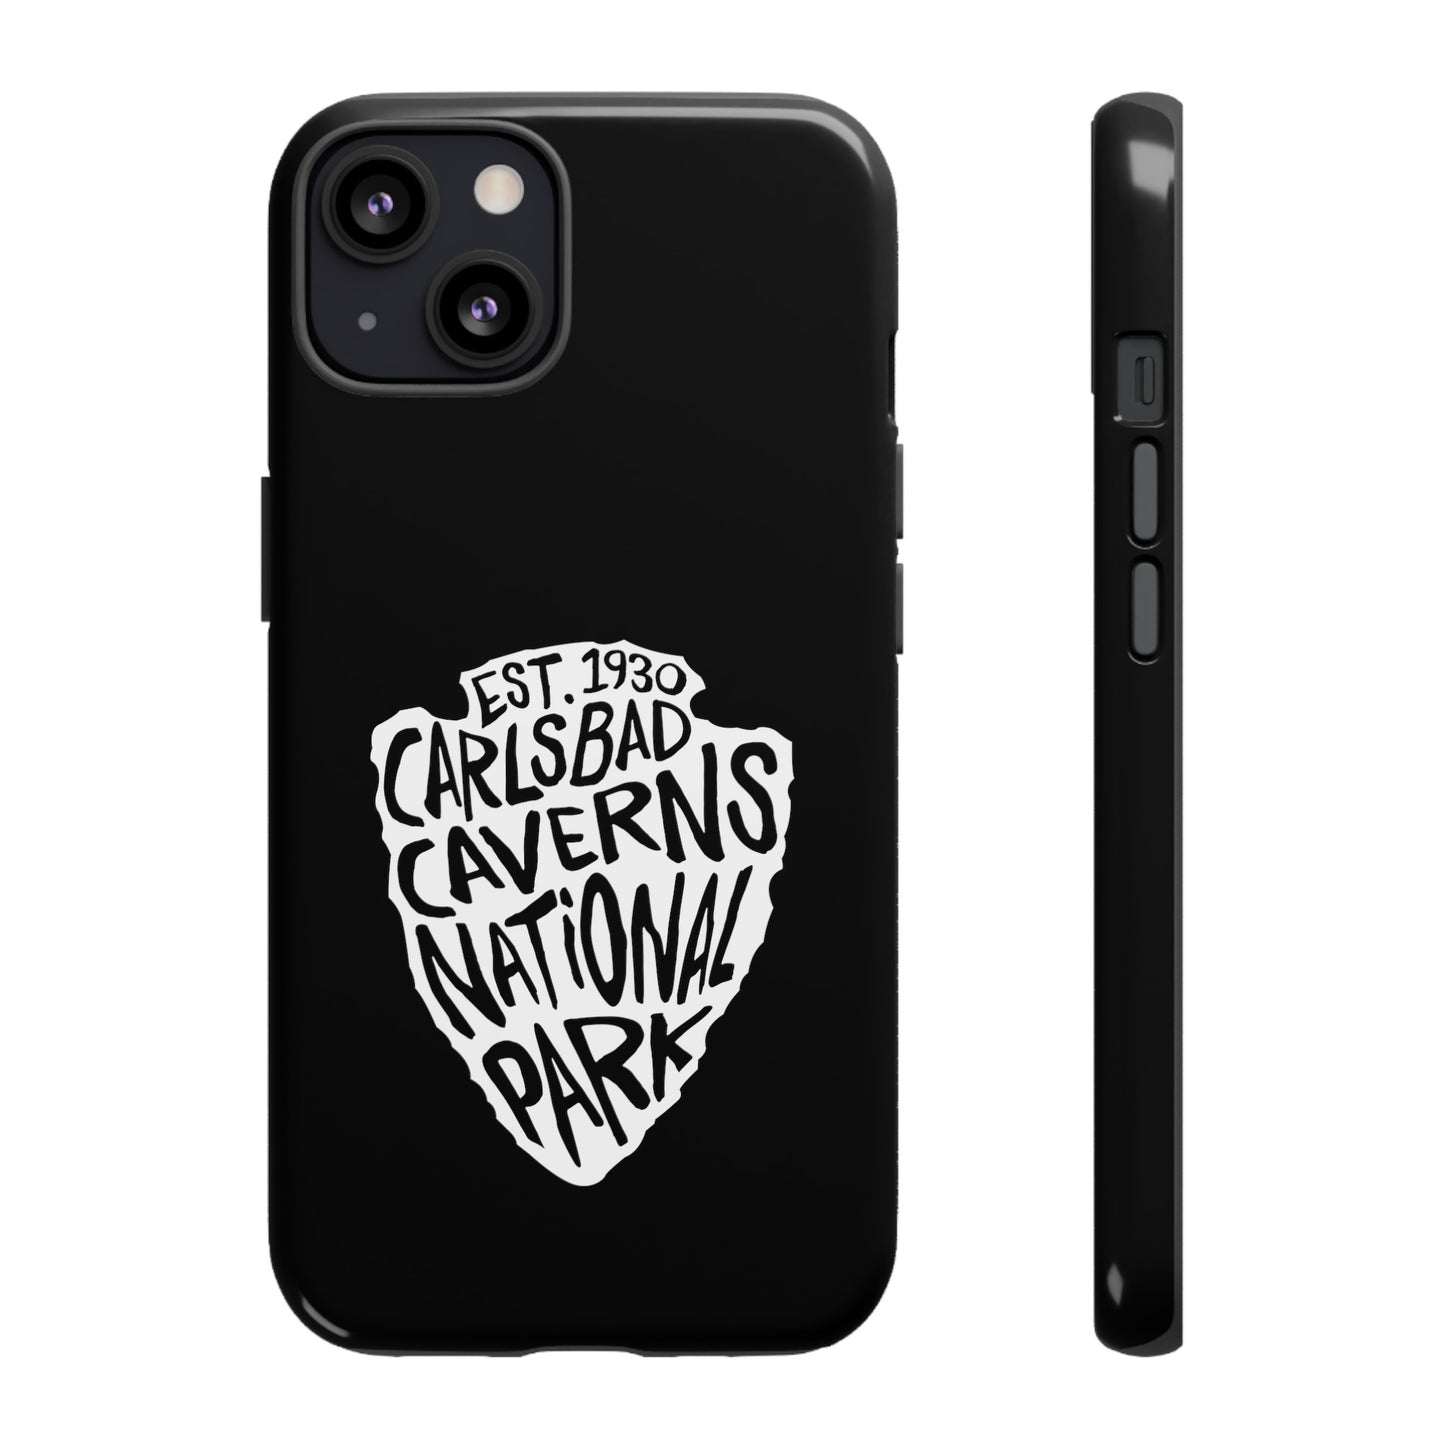 Carlsbad Caverns National Park Phone Case - Arrowhead Design